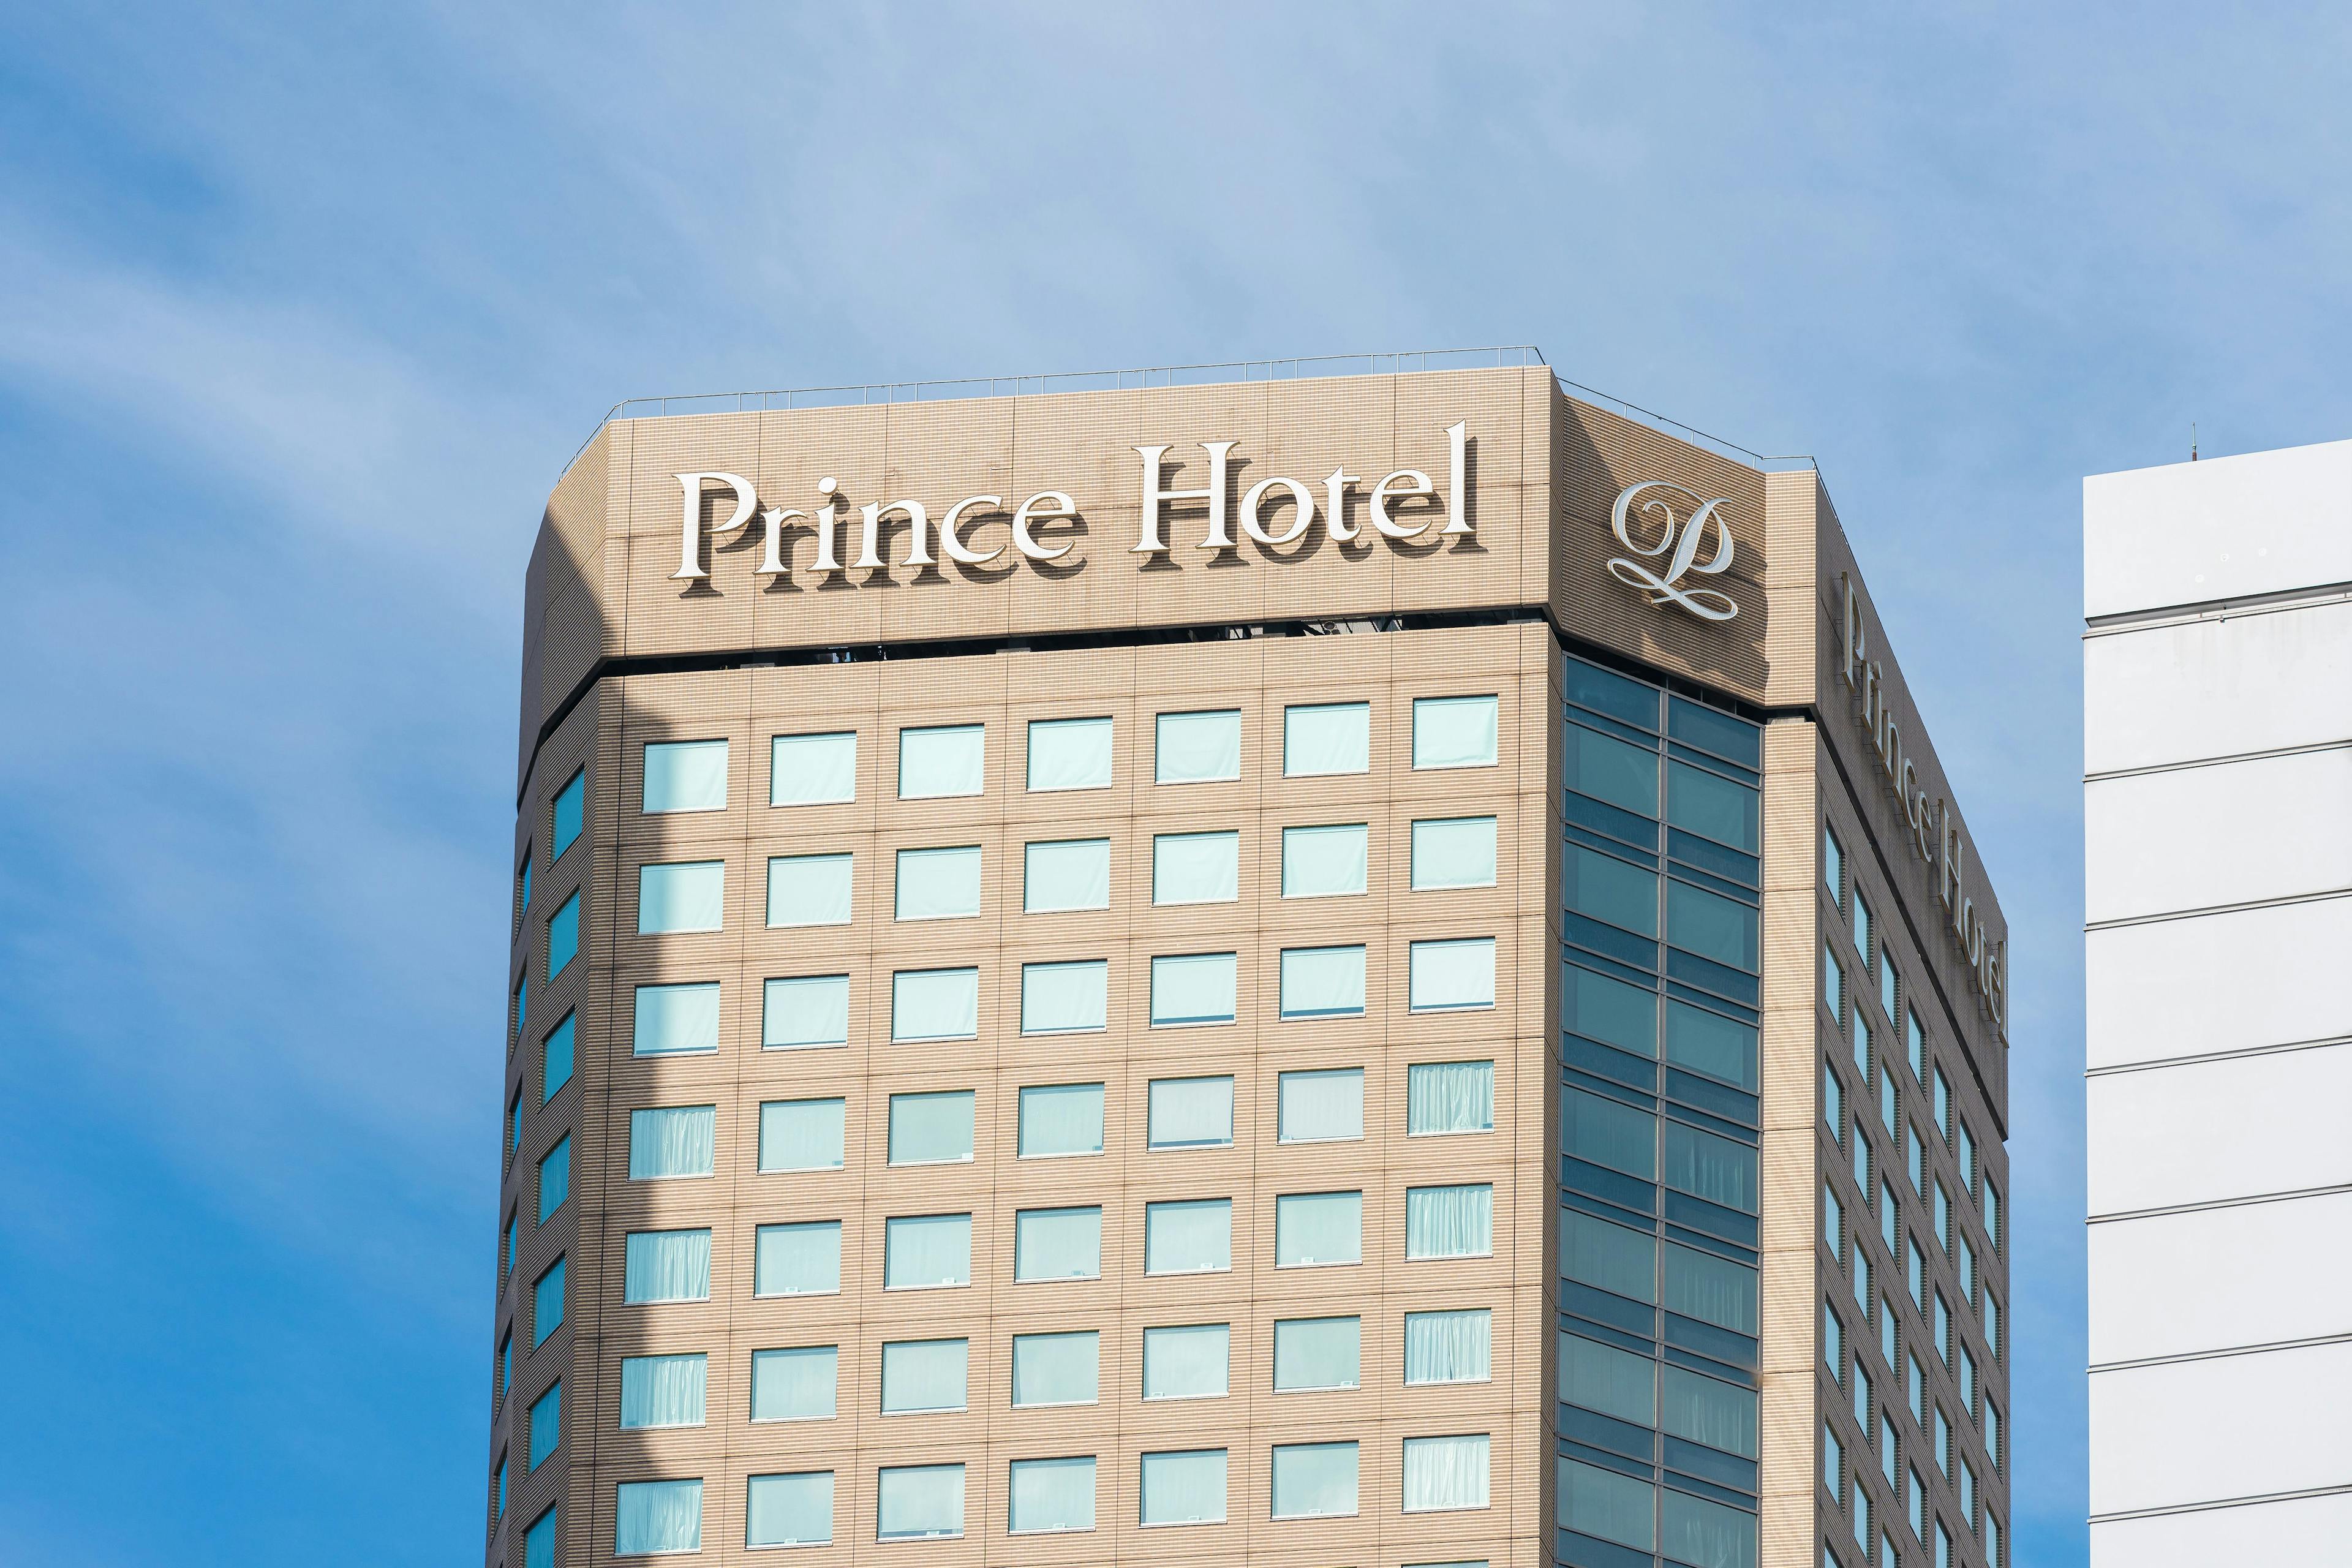 Prince hotel, Tokyo